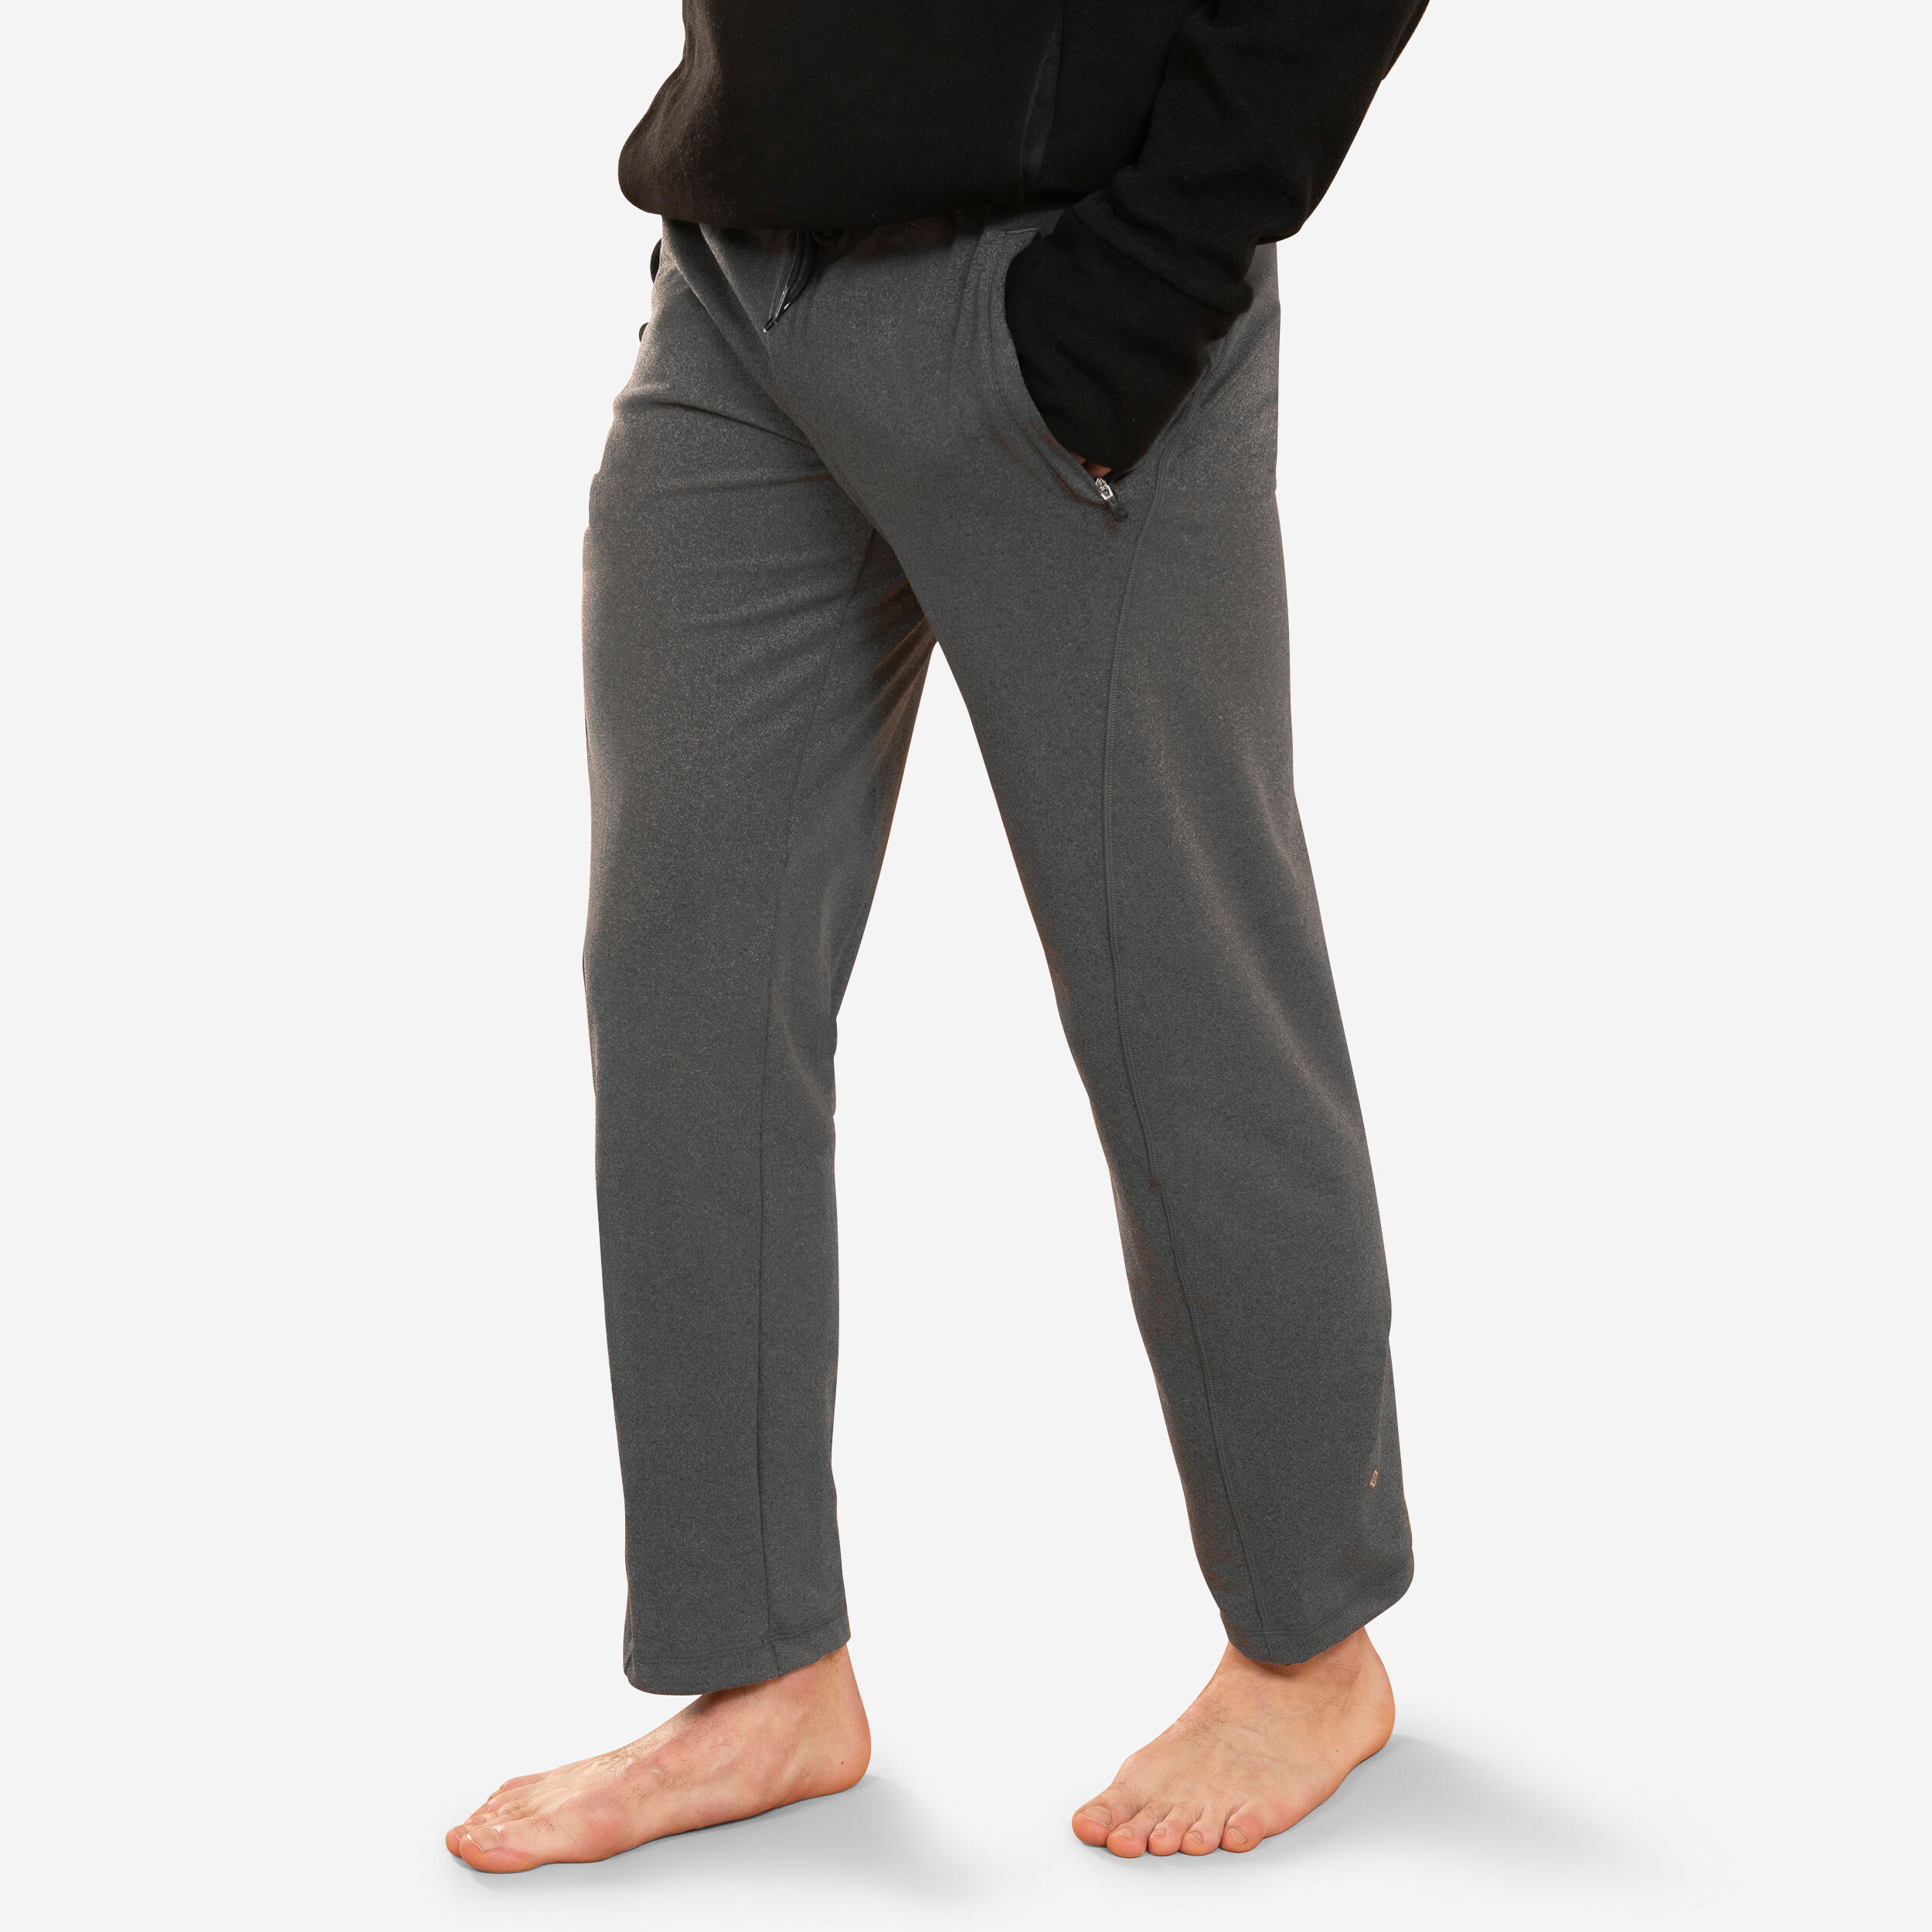 Men’s Yoga Pants - Grey - KIMJALY